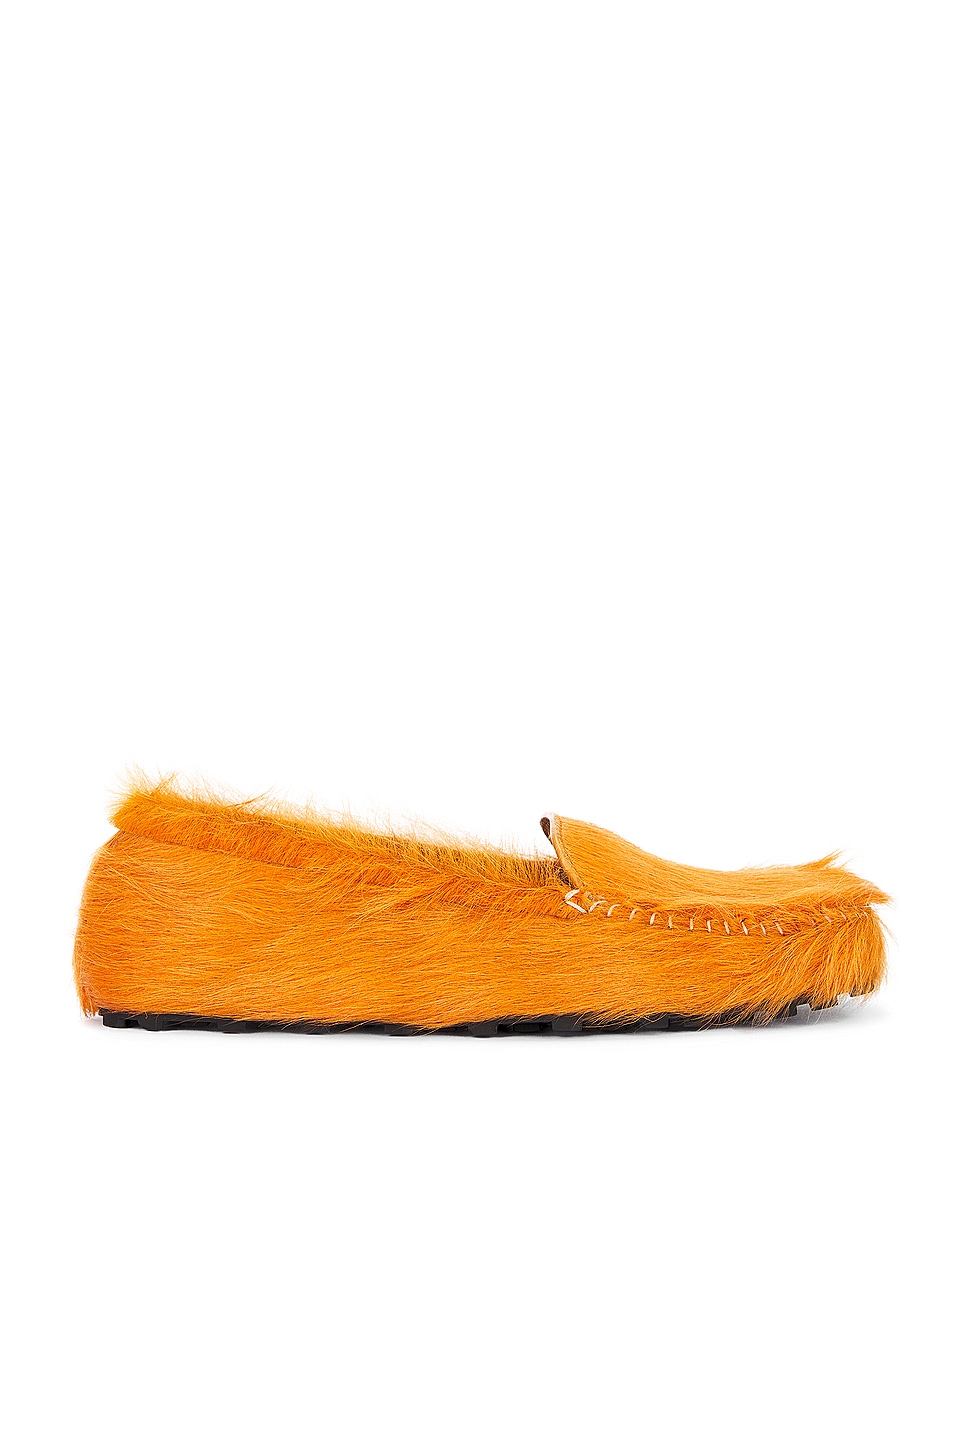 Image 1 of Marni Moccasin Shoe in Pumpkin